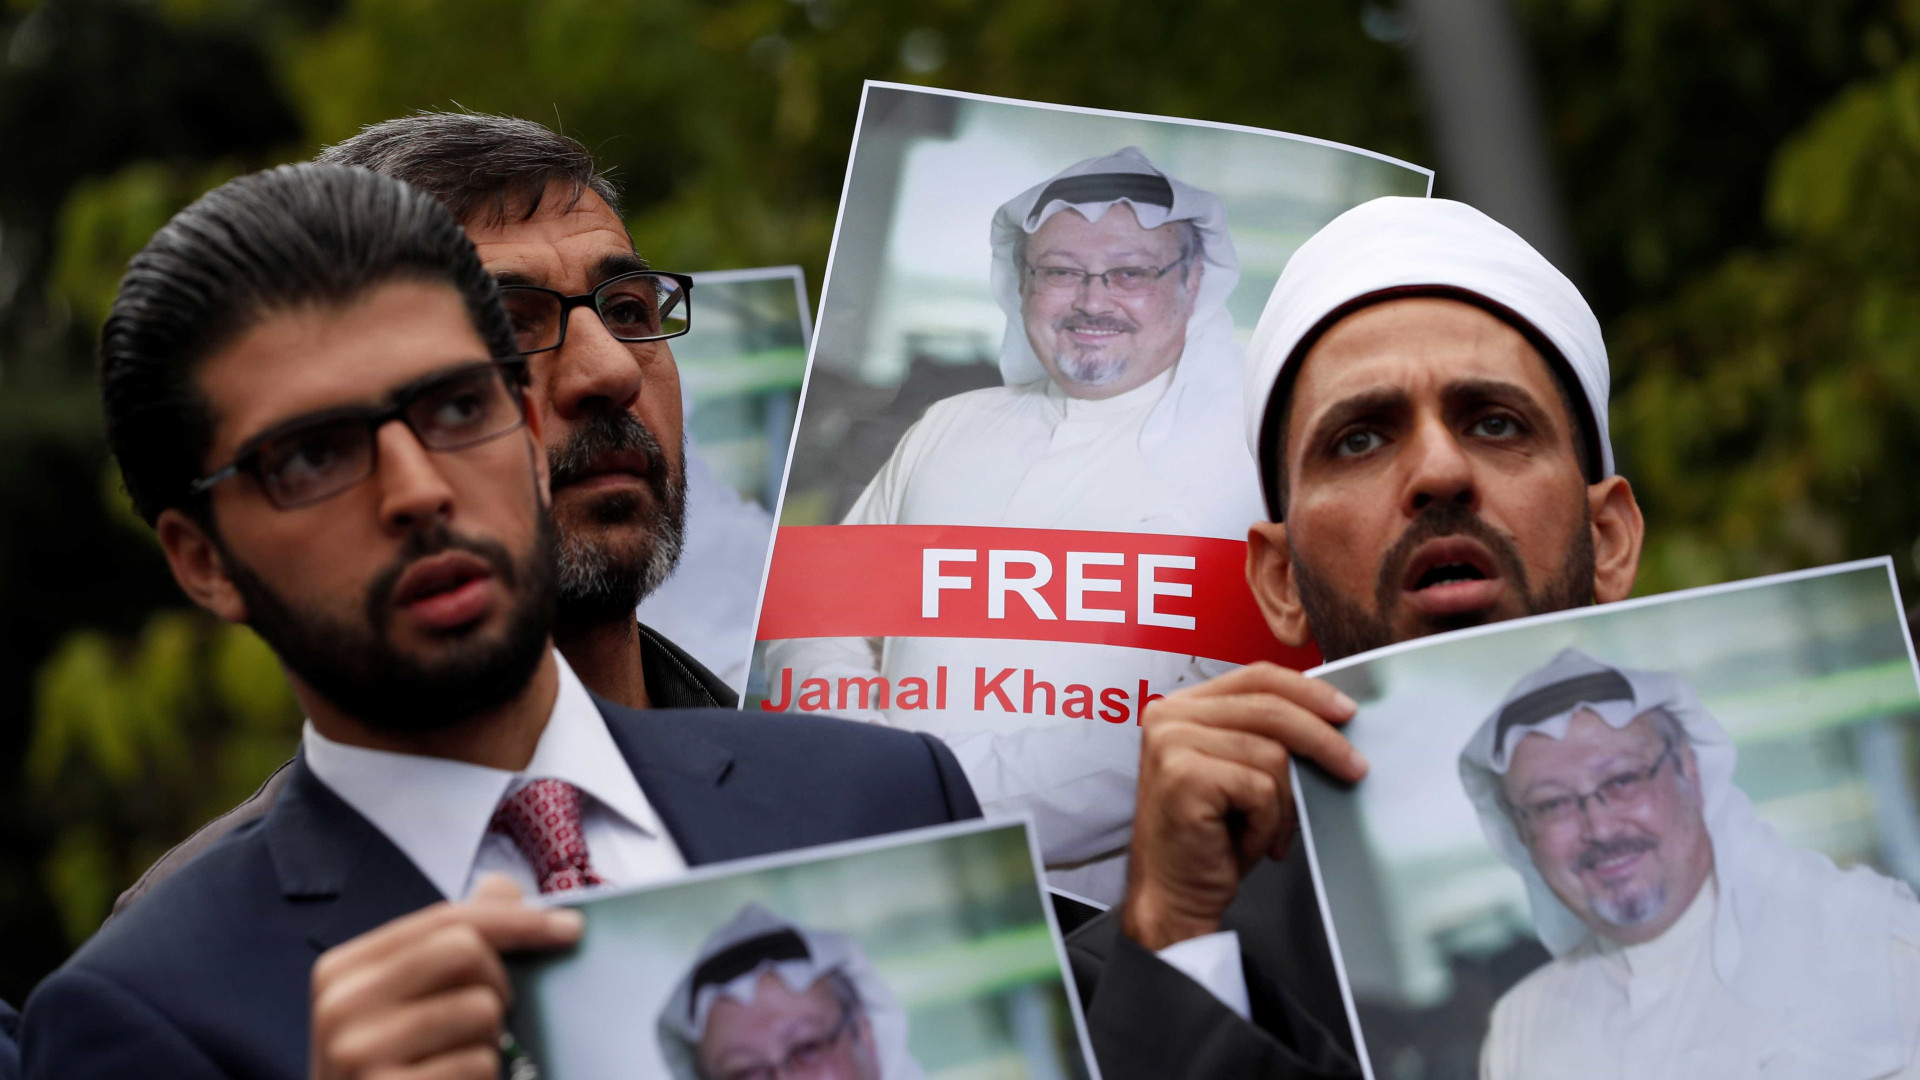 Arábia Saudita irá admitir morte de jornalista, diz imprensa